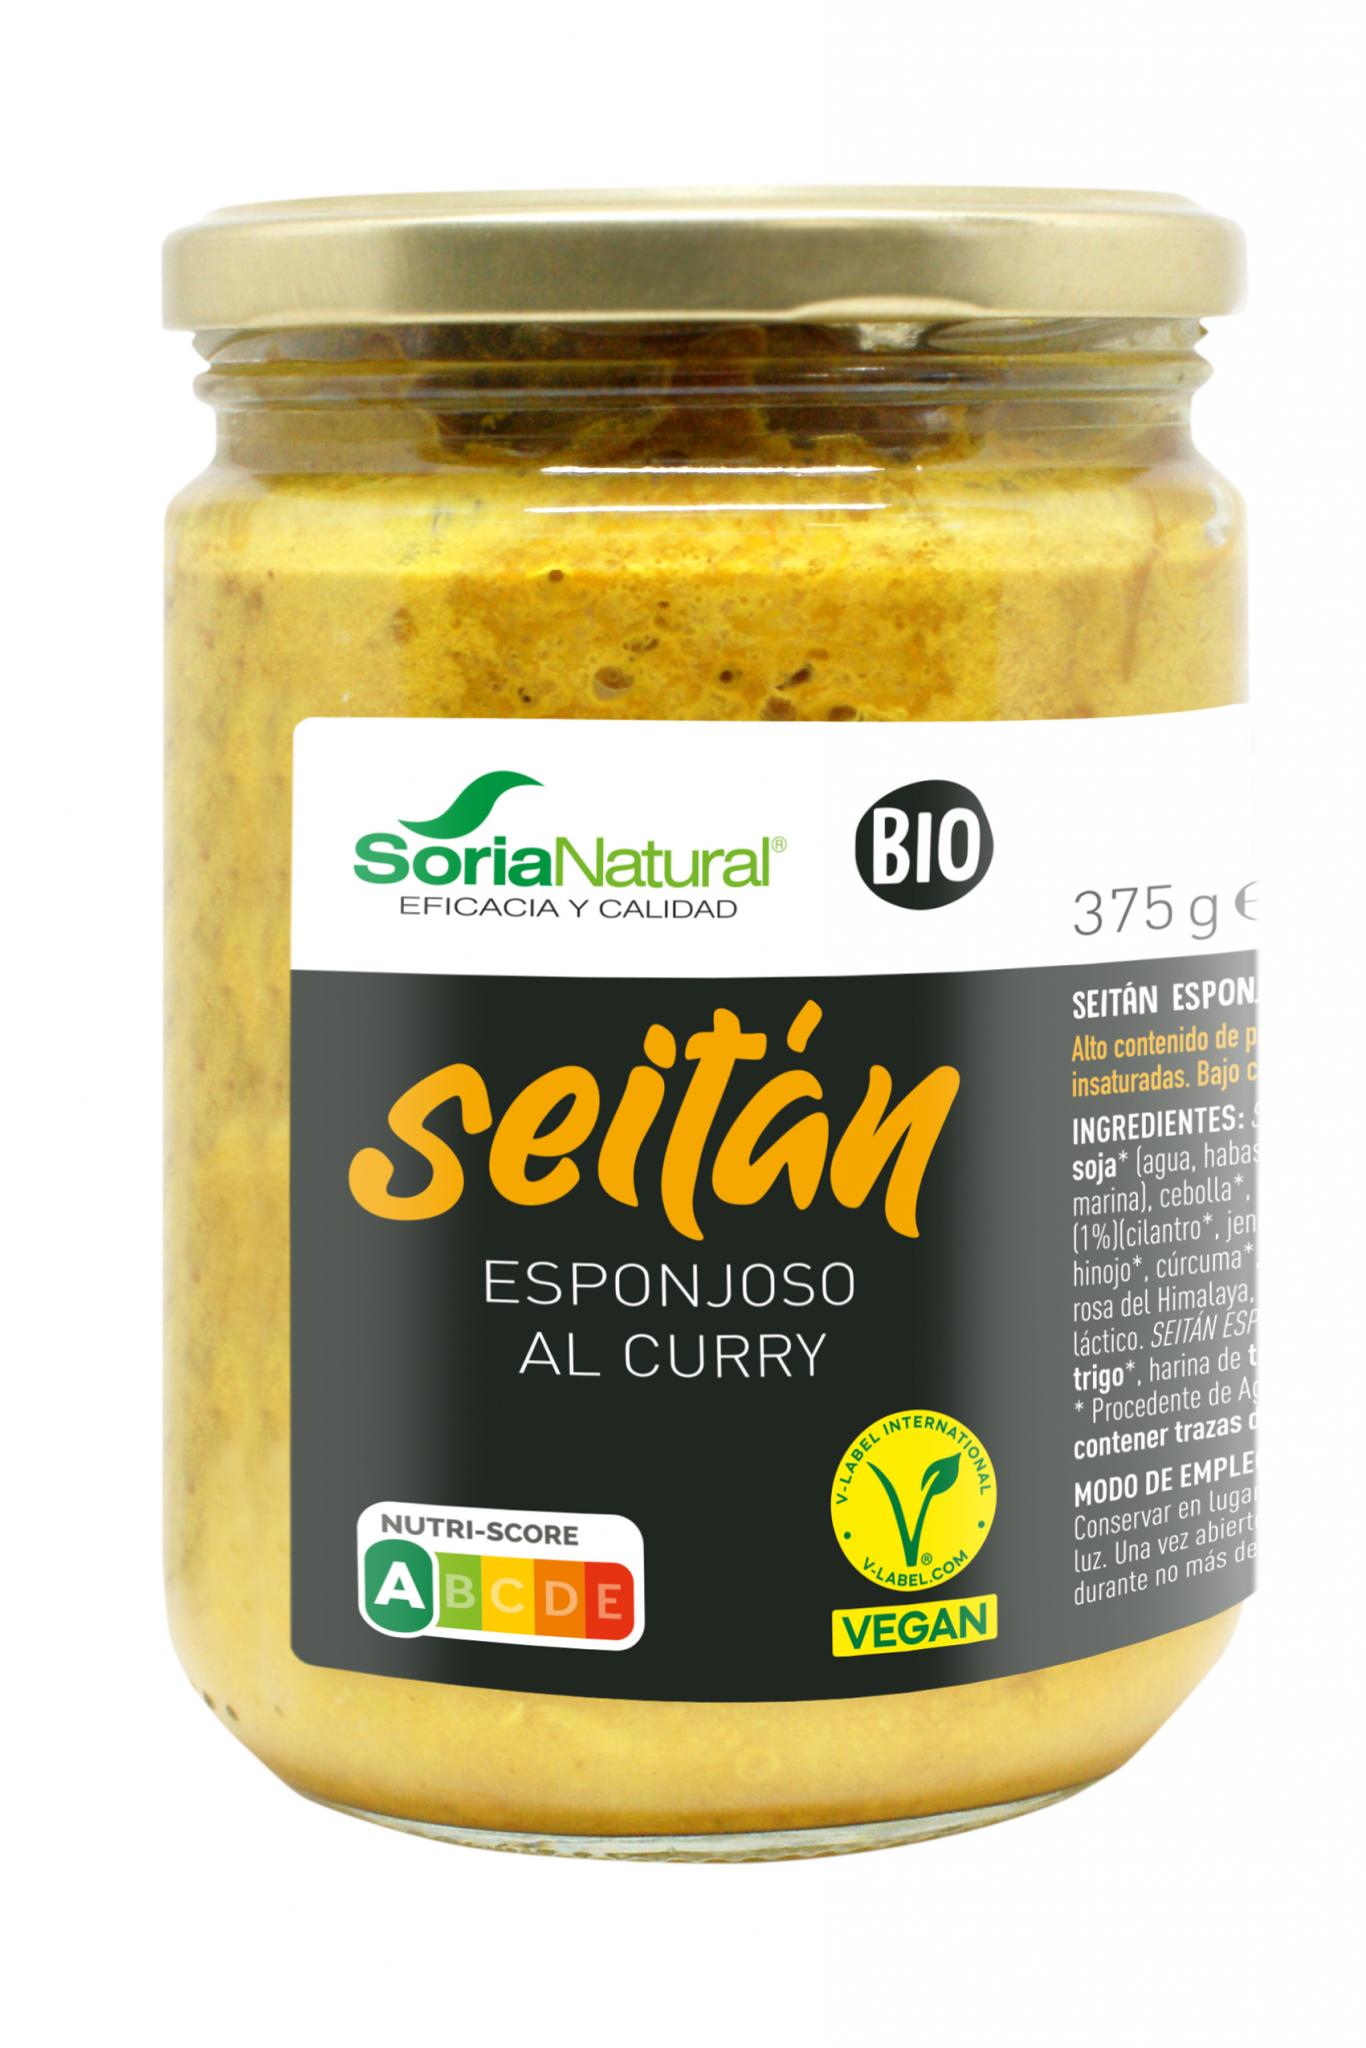 seitán-al-curry-soria-natural.jpg